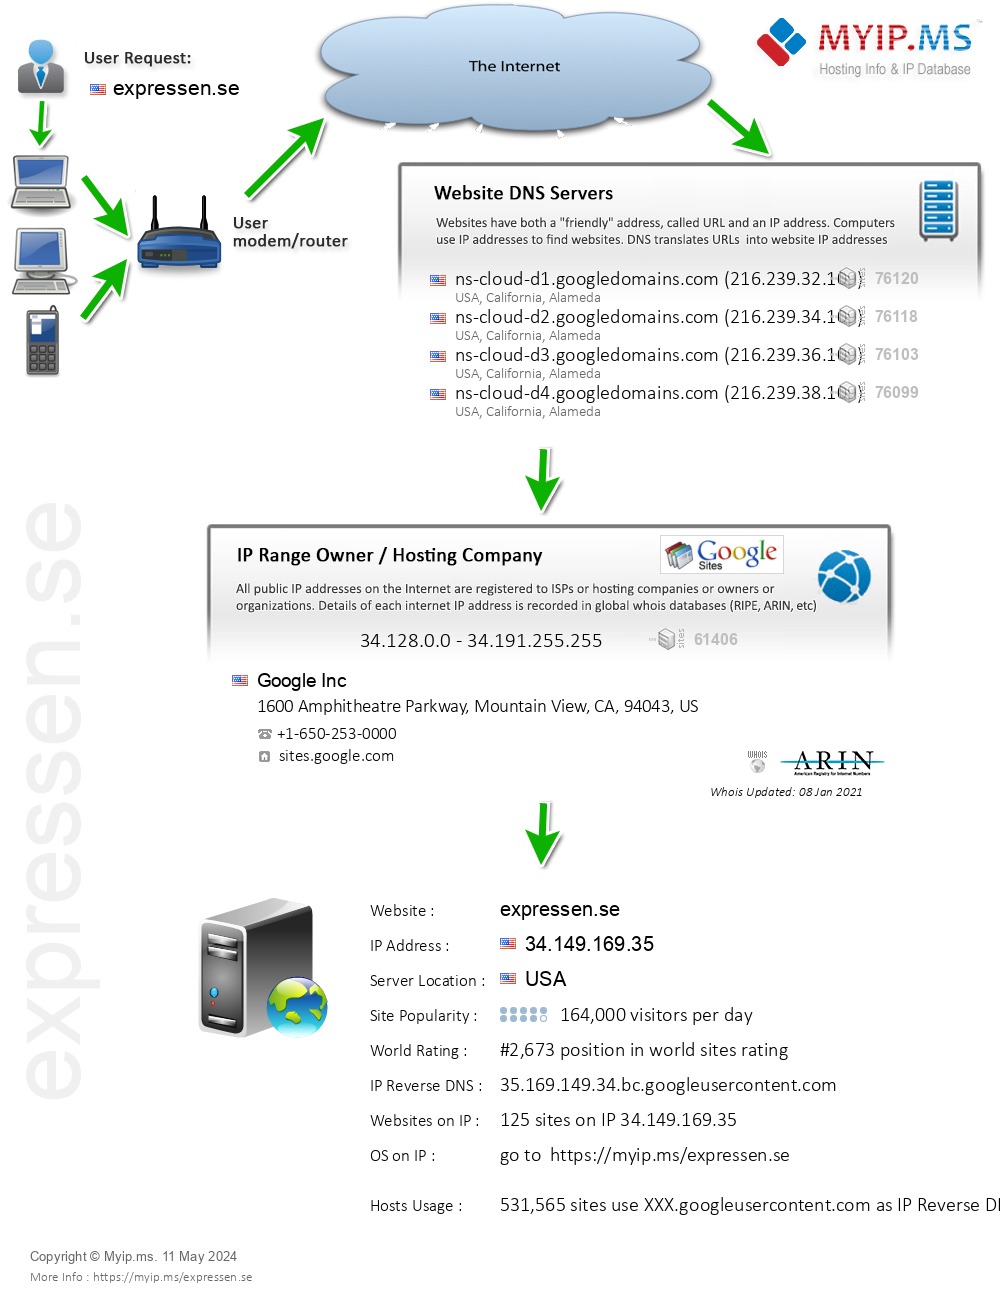 Expressen.se - Website Hosting Visual IP Diagram